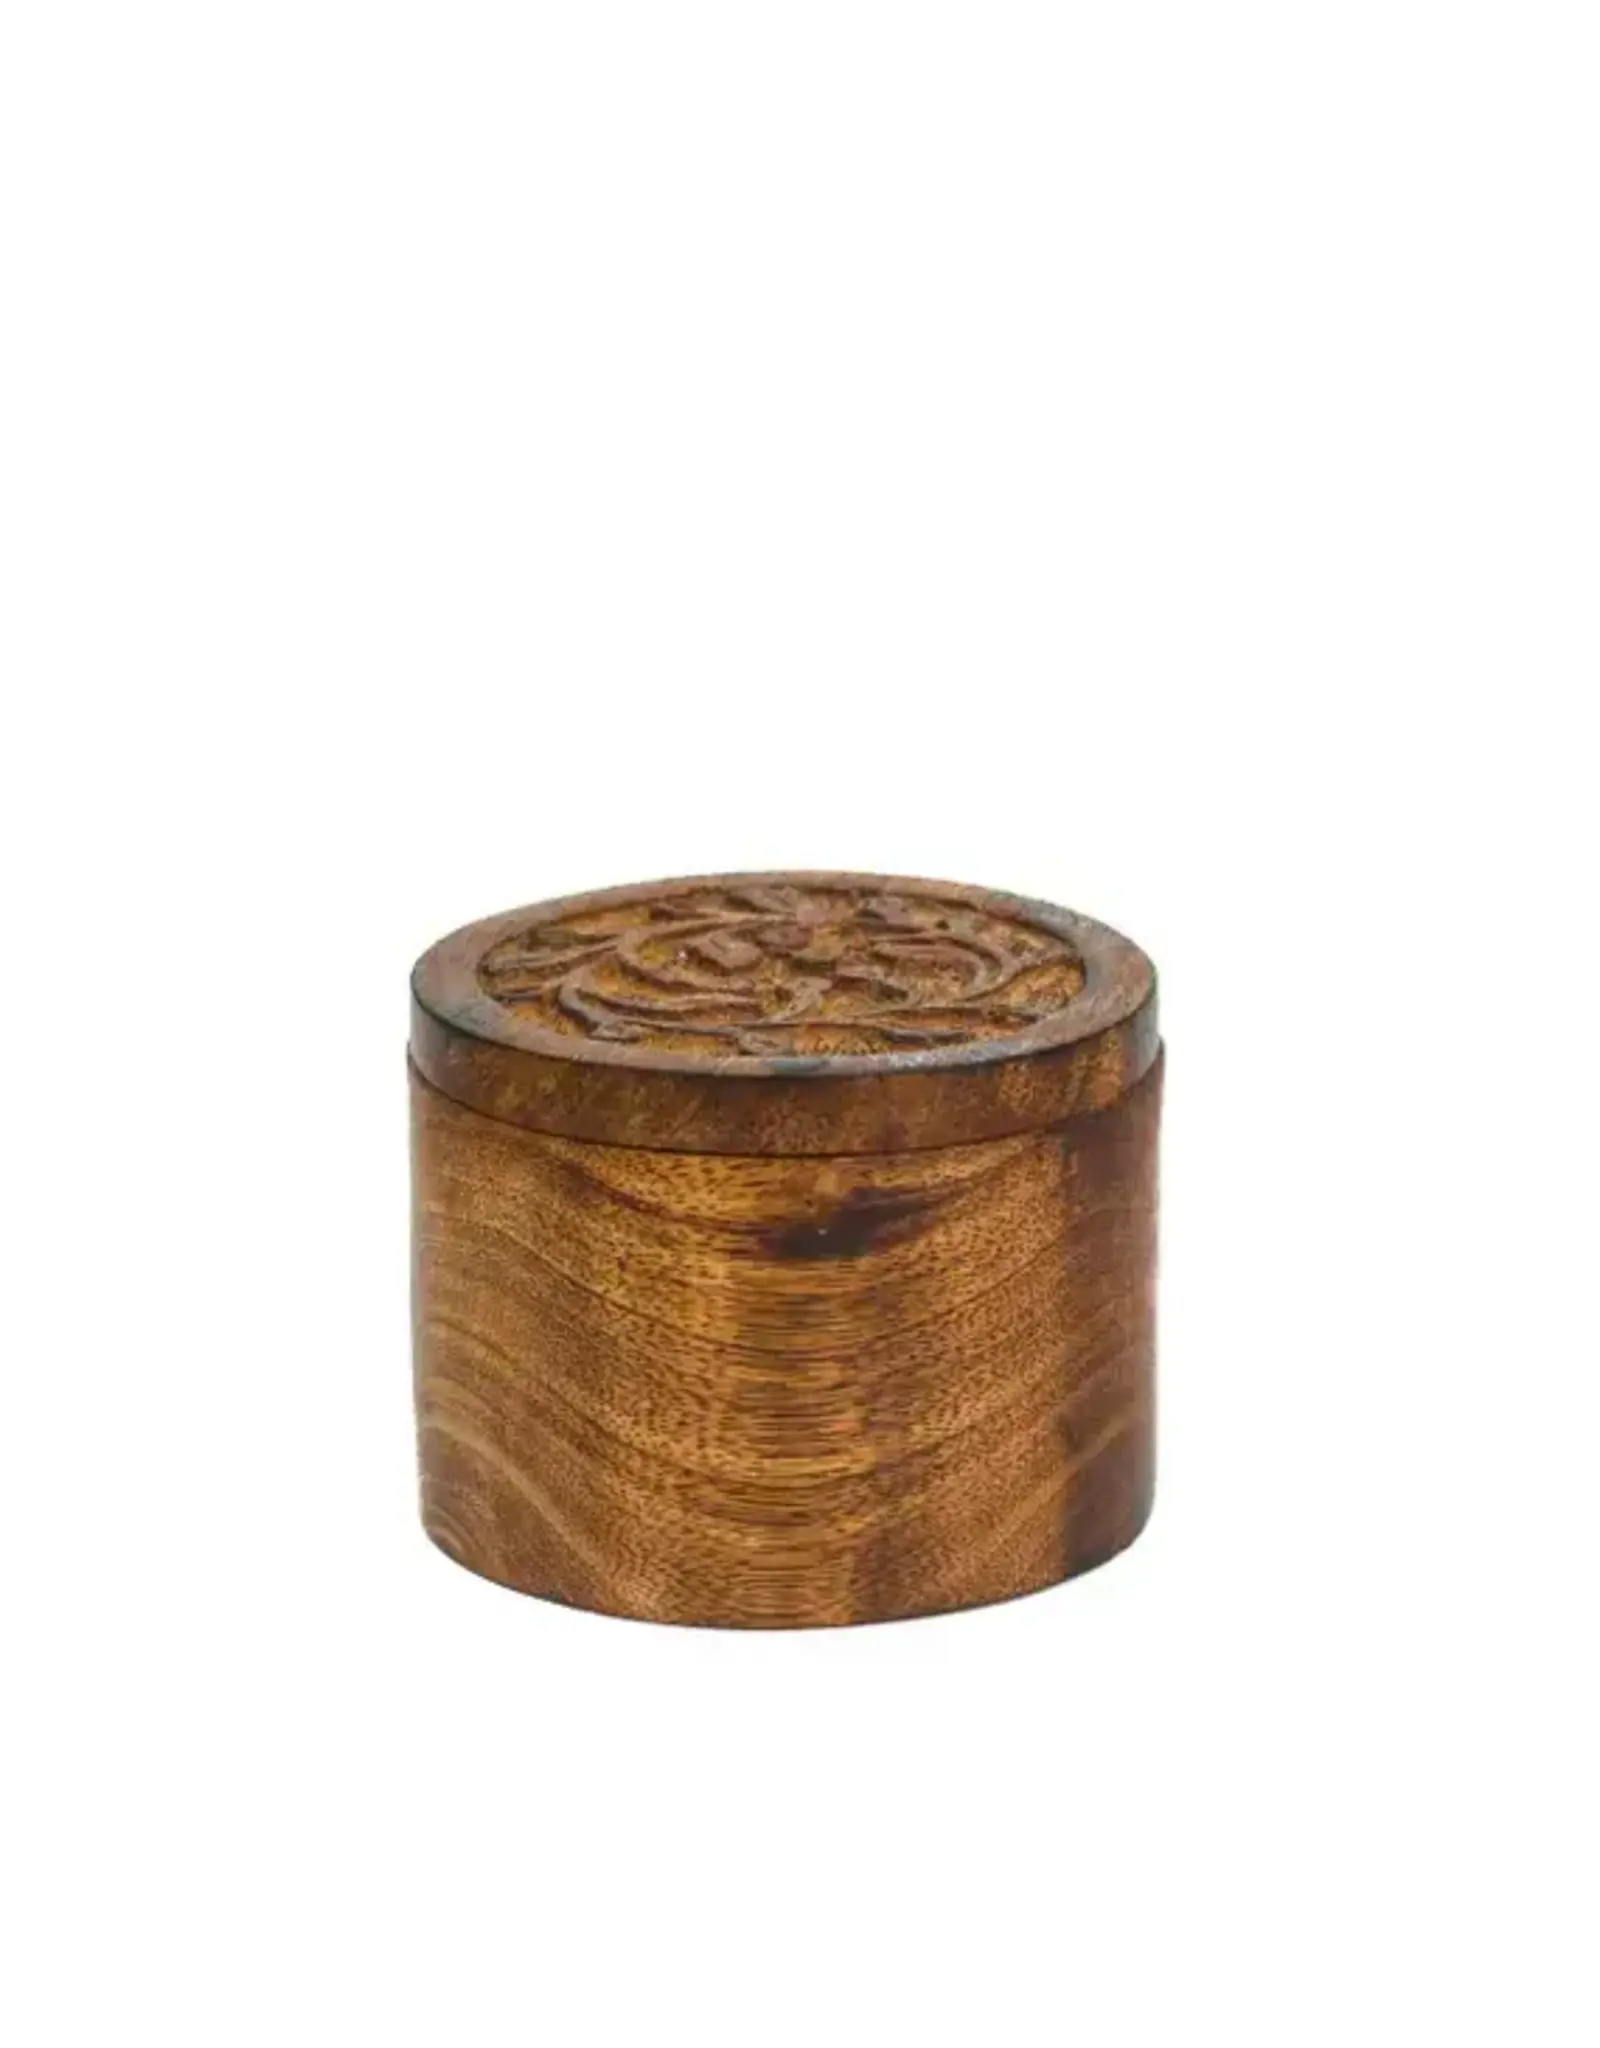 Matr Boomie Flora Salt Cellar Spice Box With Swivel Lid - Carved Wood